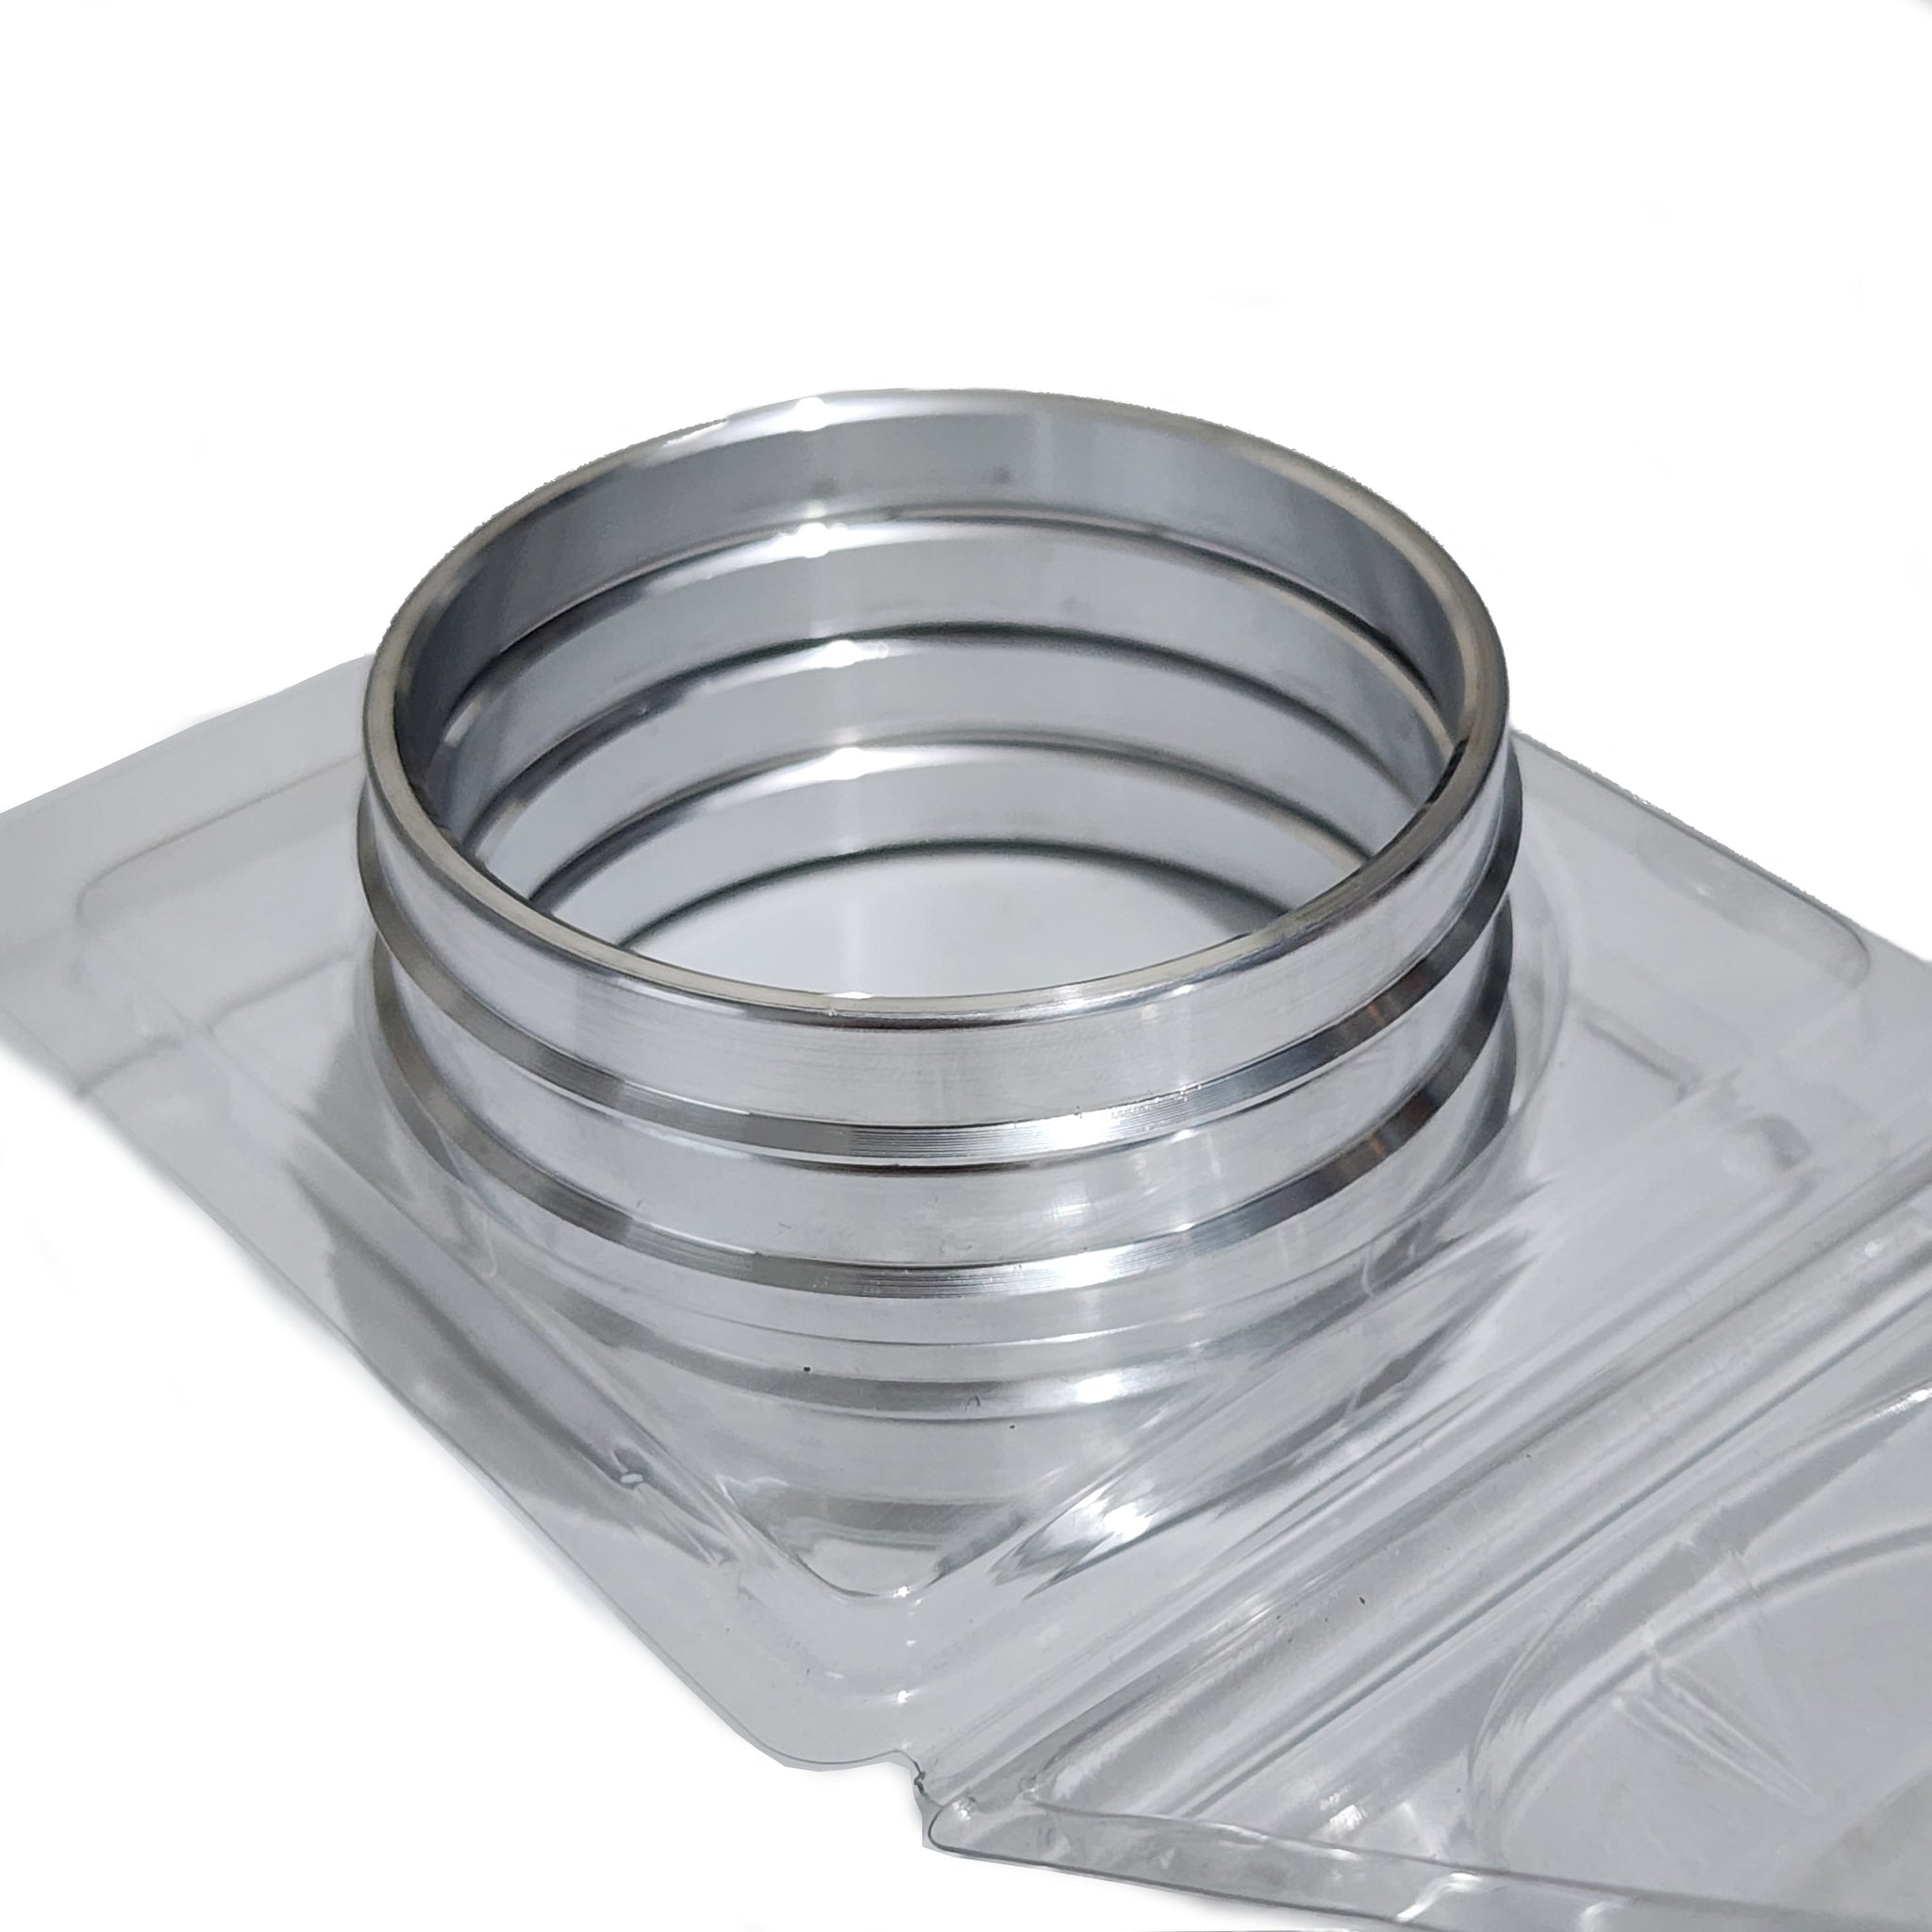 Wheels Hub Centric Rings Aluminium Alloy OD = 80.1 mm to ID = 60.1 mm One  Set | eBay